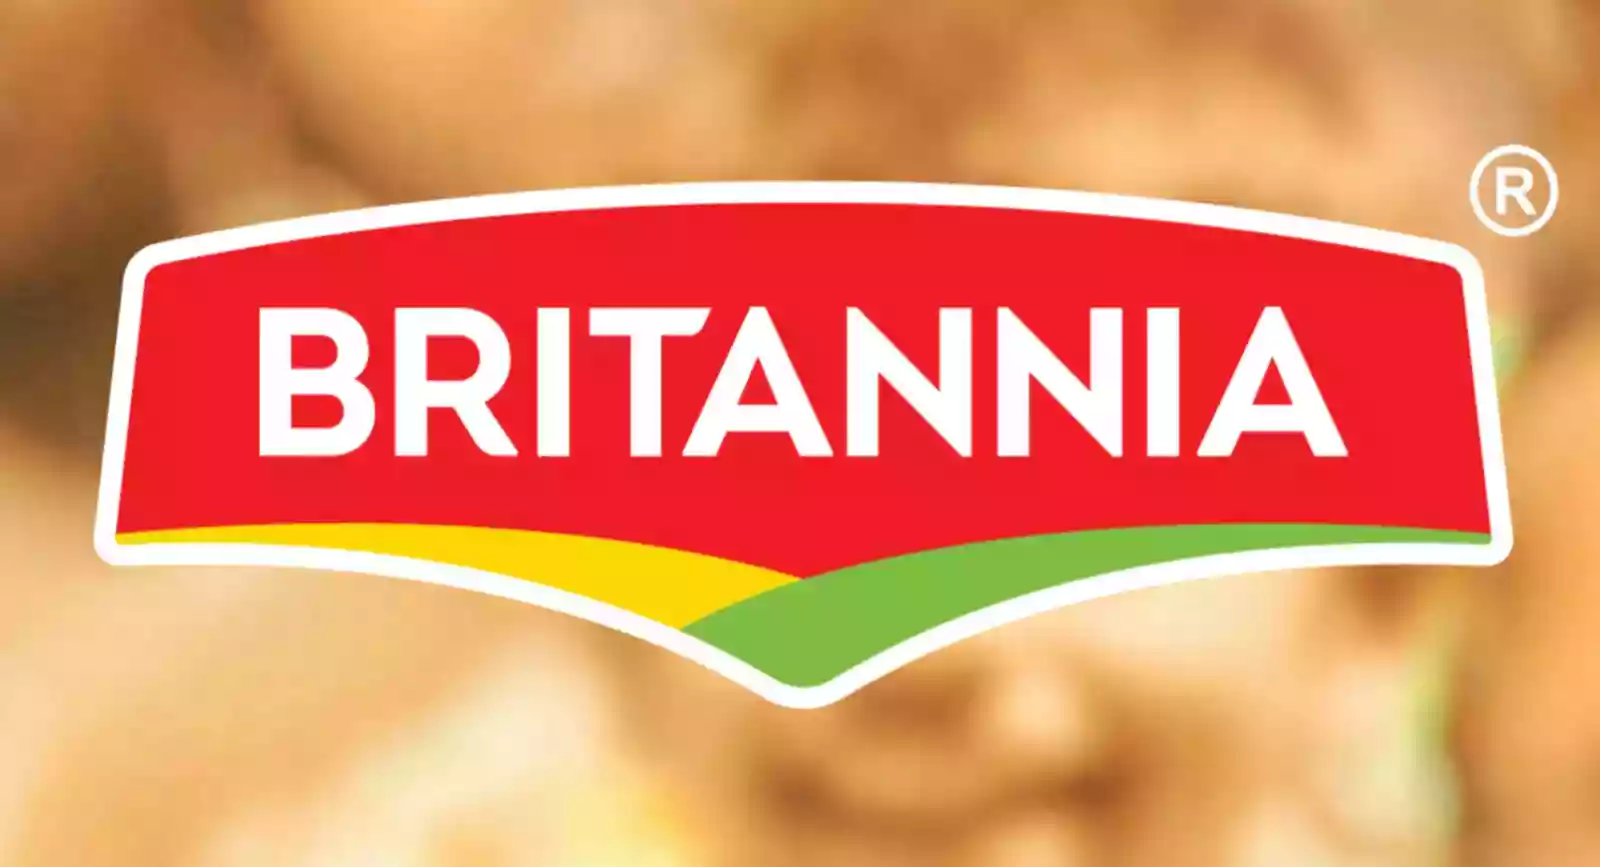 Britannia company shutdown in Kolkata leaves temp workers unpaid